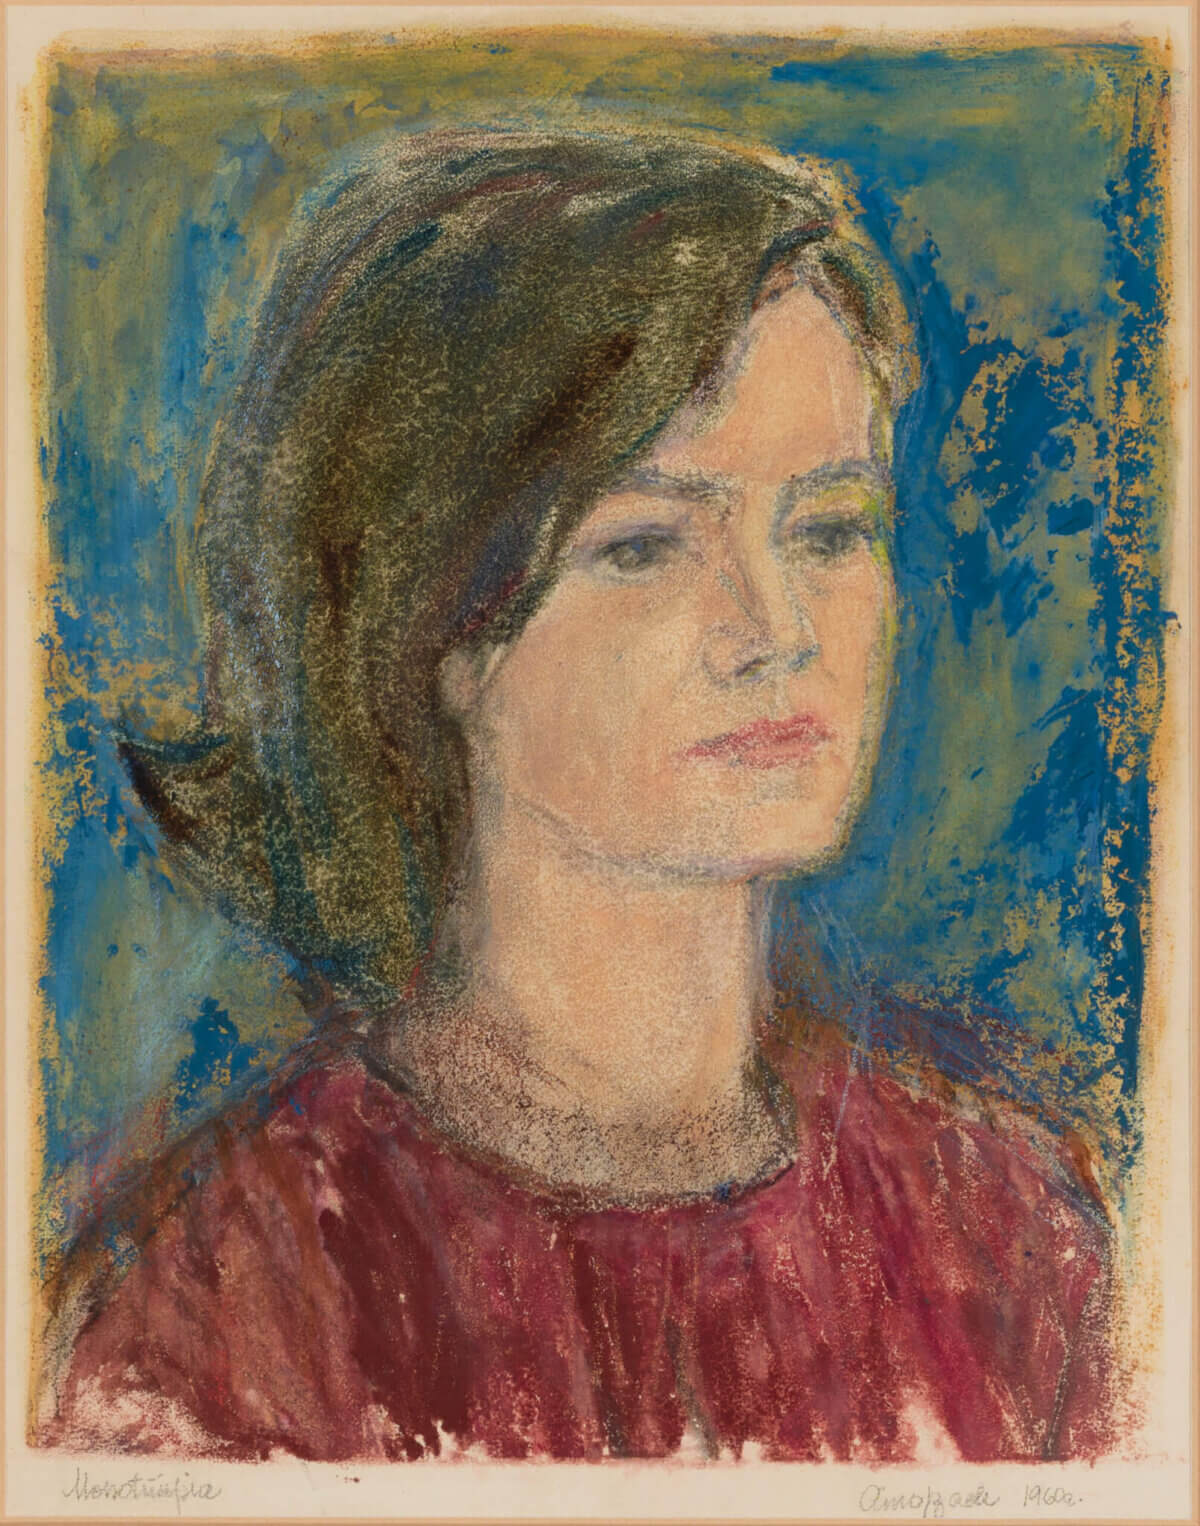 31. AINO BACH “Neiu portree” 1960